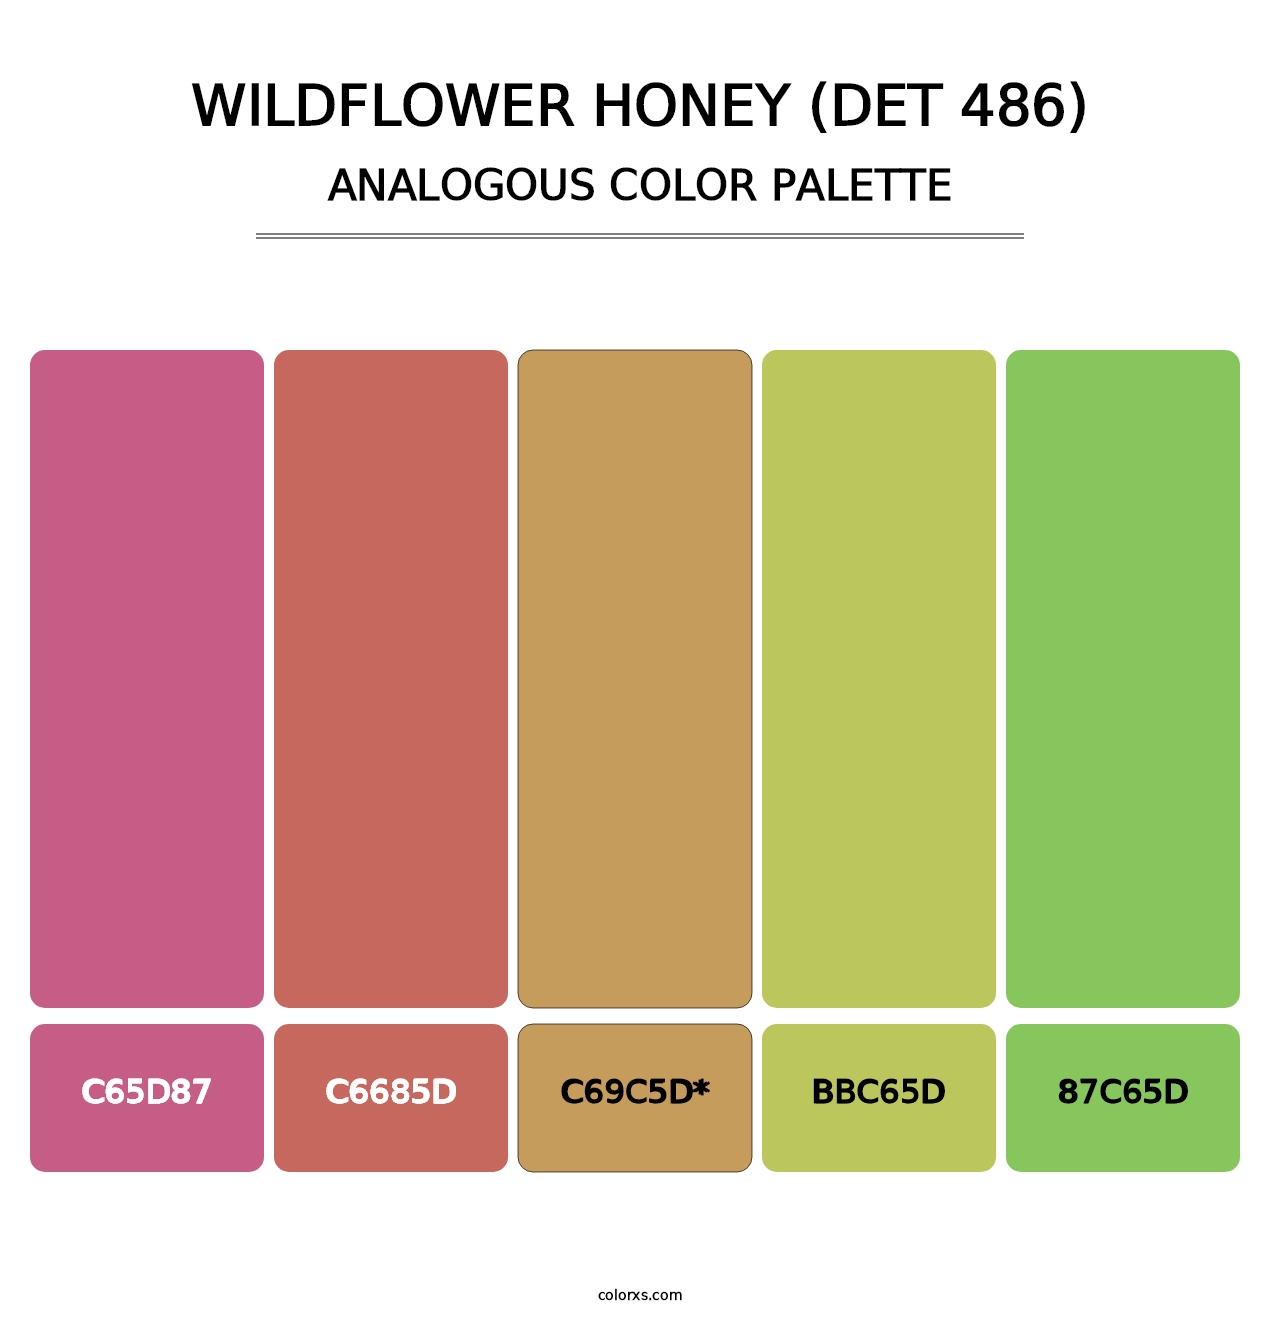 Wildflower Honey (DET 486) - Analogous Color Palette